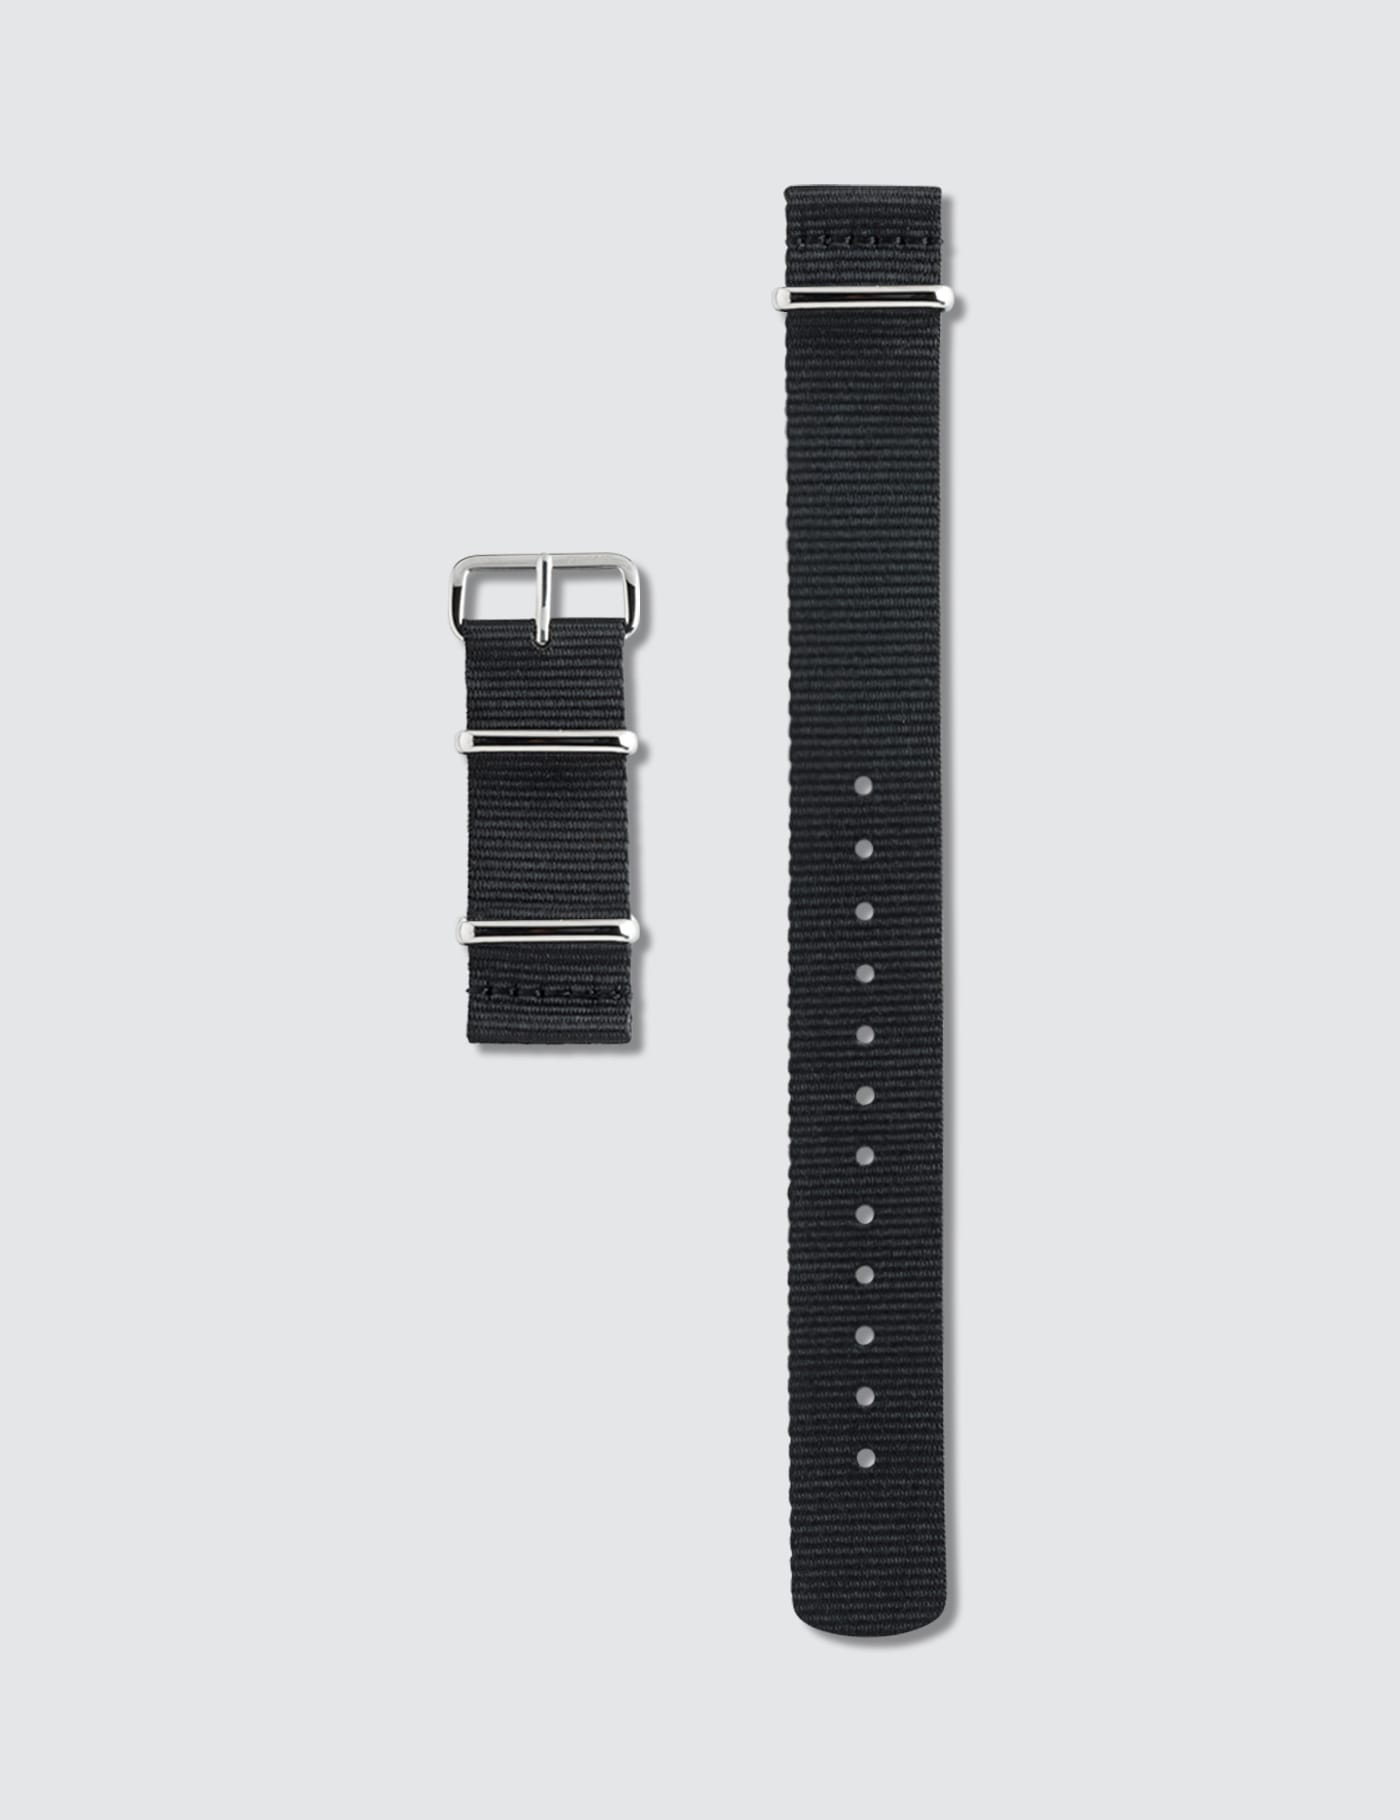 Fragment Design - NATO Type Watch Strap Set | HBX - Globally